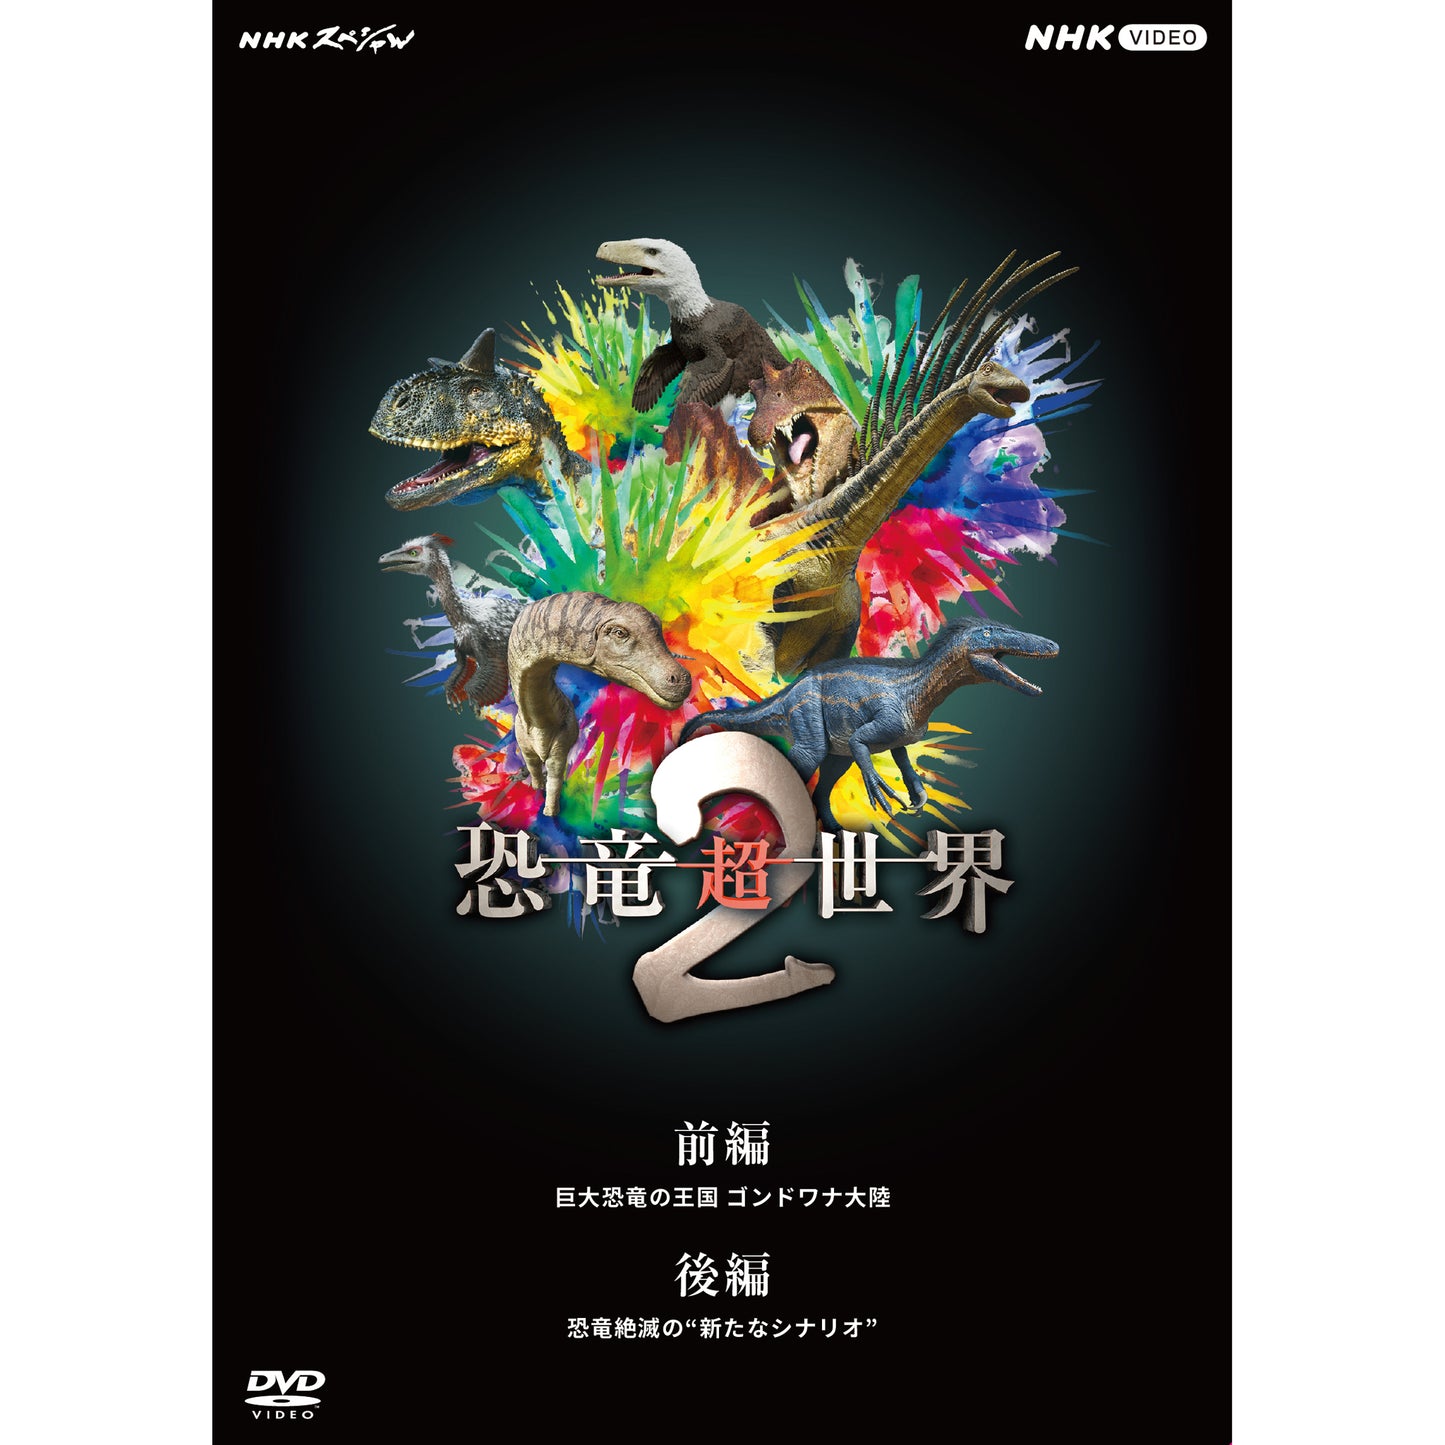 NHKスペシャル 恐竜超世界 2 BOX [DVD]